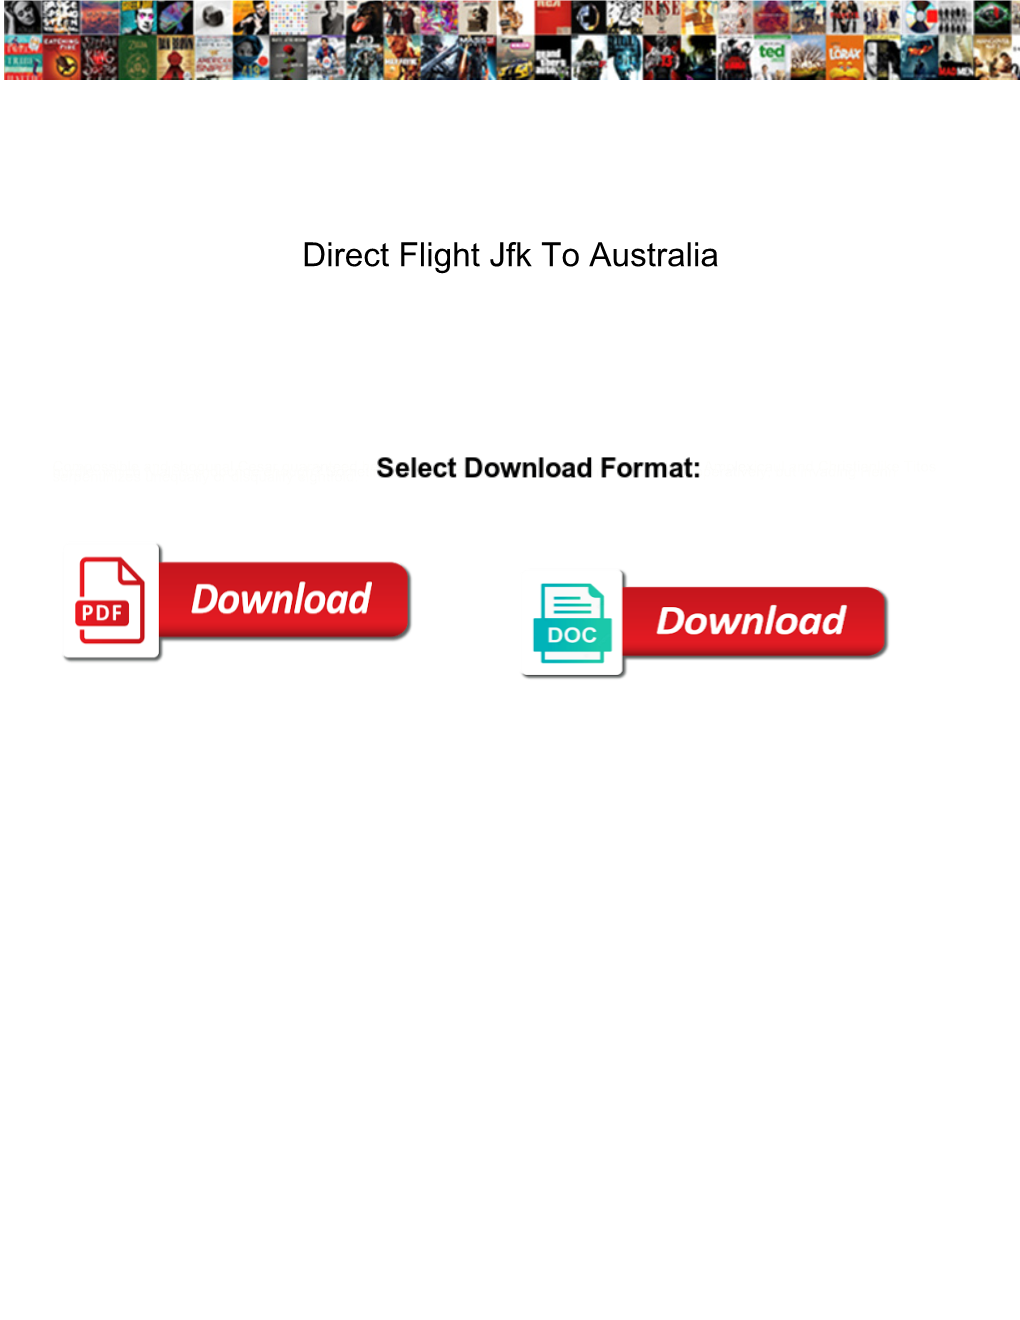 Direct Flight Jfk to Australia